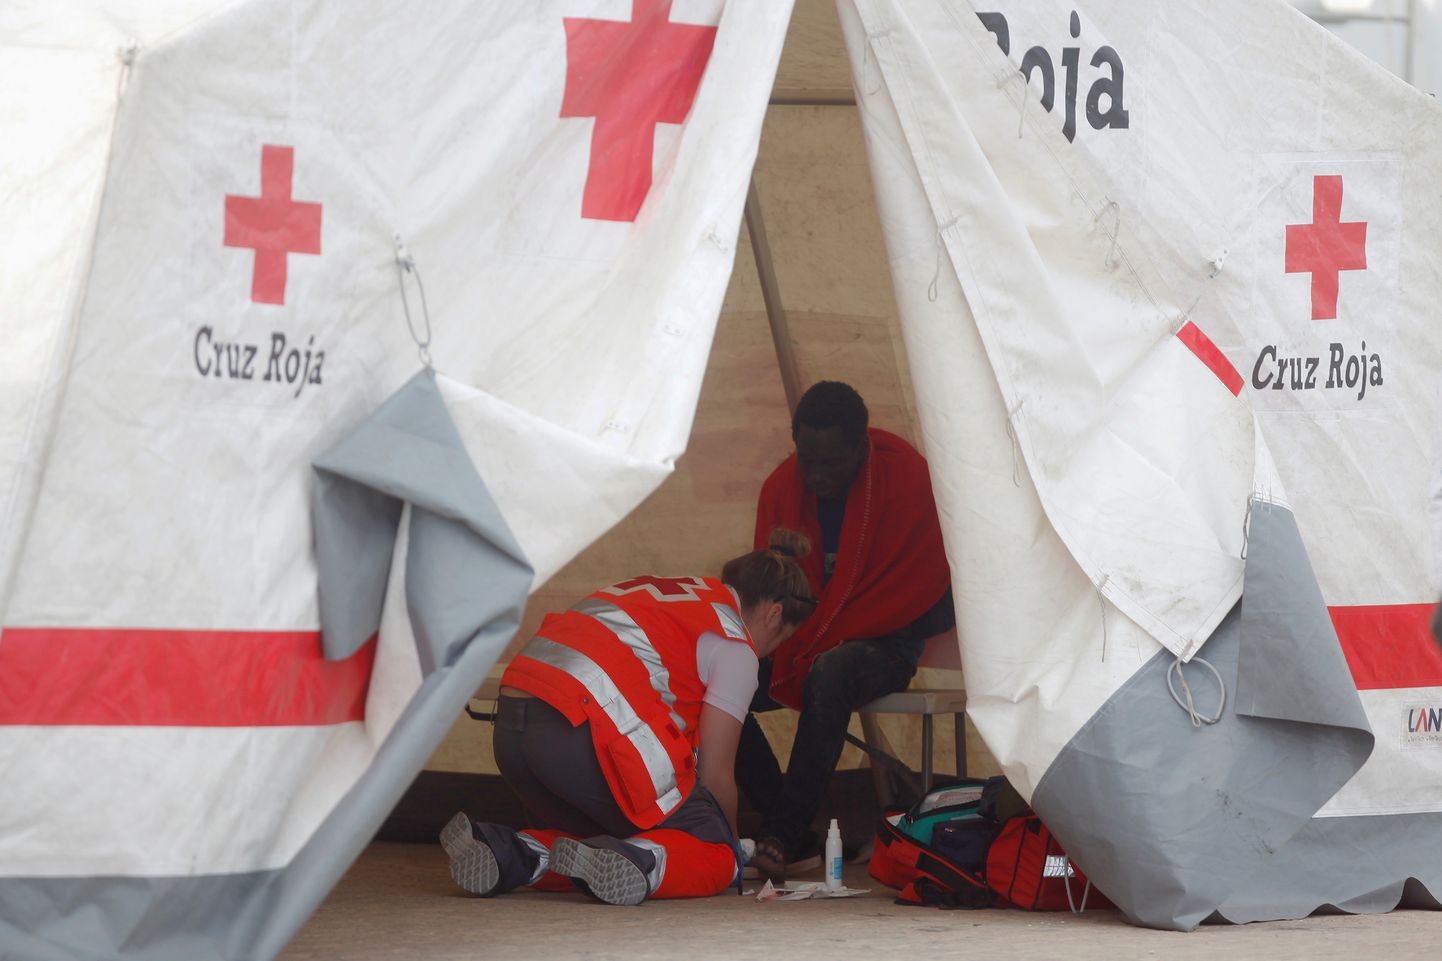 Hispaania Punane Rist migrandile abi osutamas.